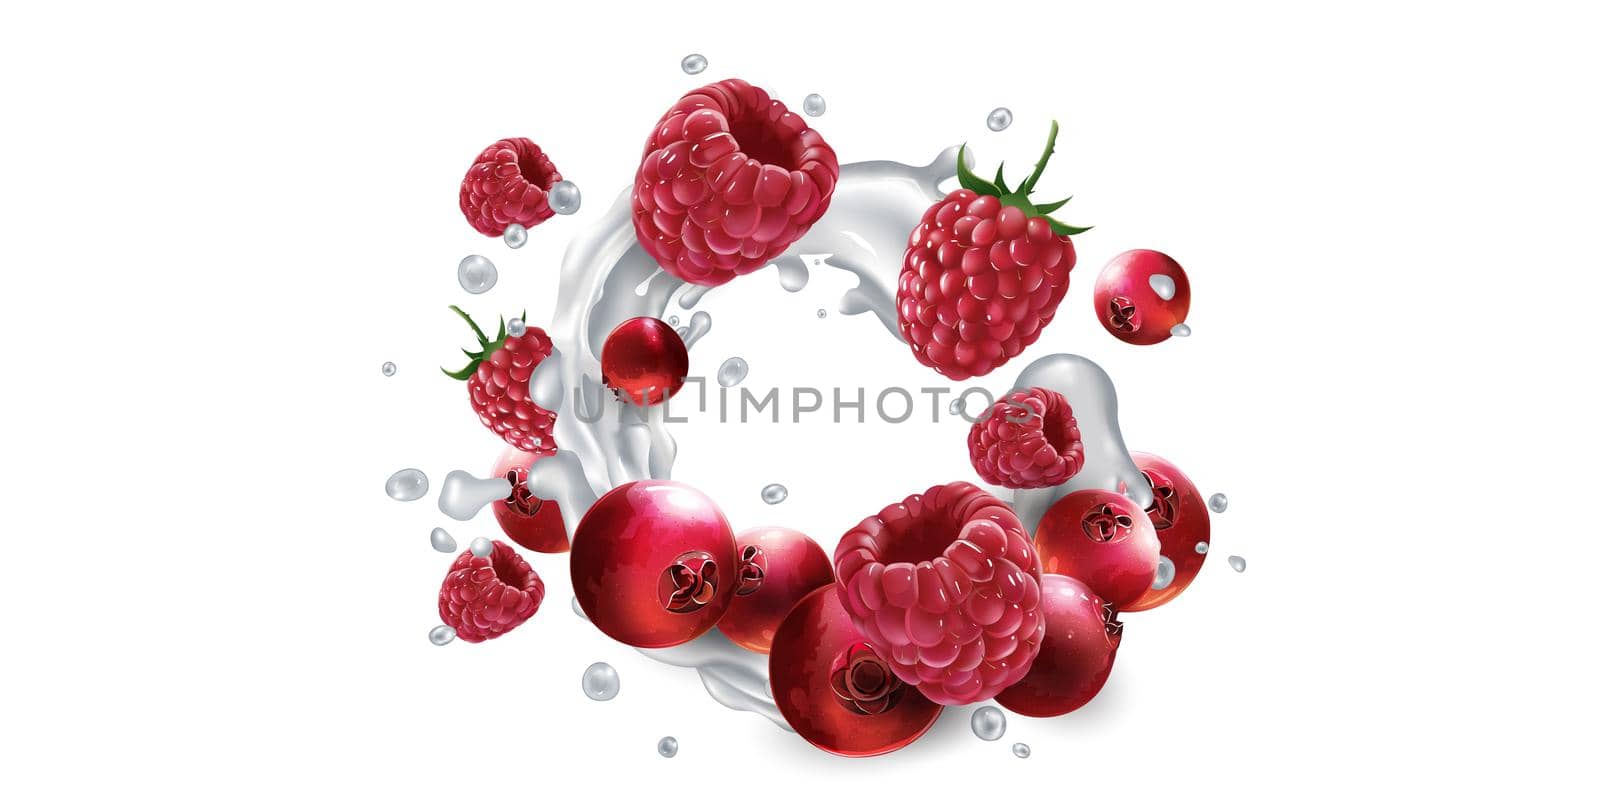 Cranberries and raspberries in splashes of yogurt or milk. by ConceptCafe